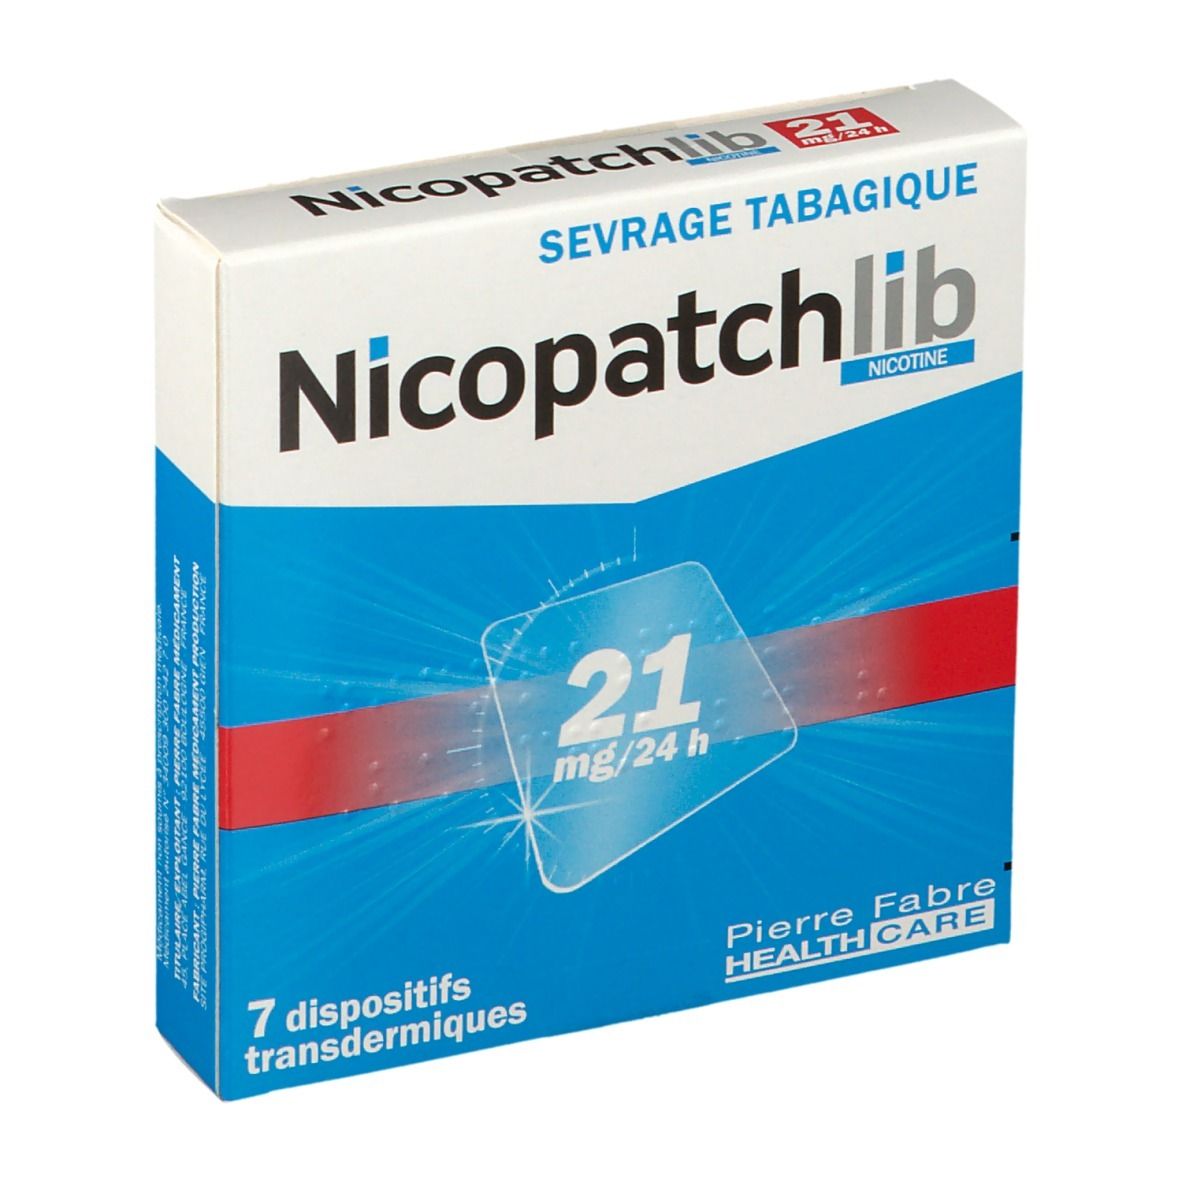 Nicopatchlib 21 mg/24 h